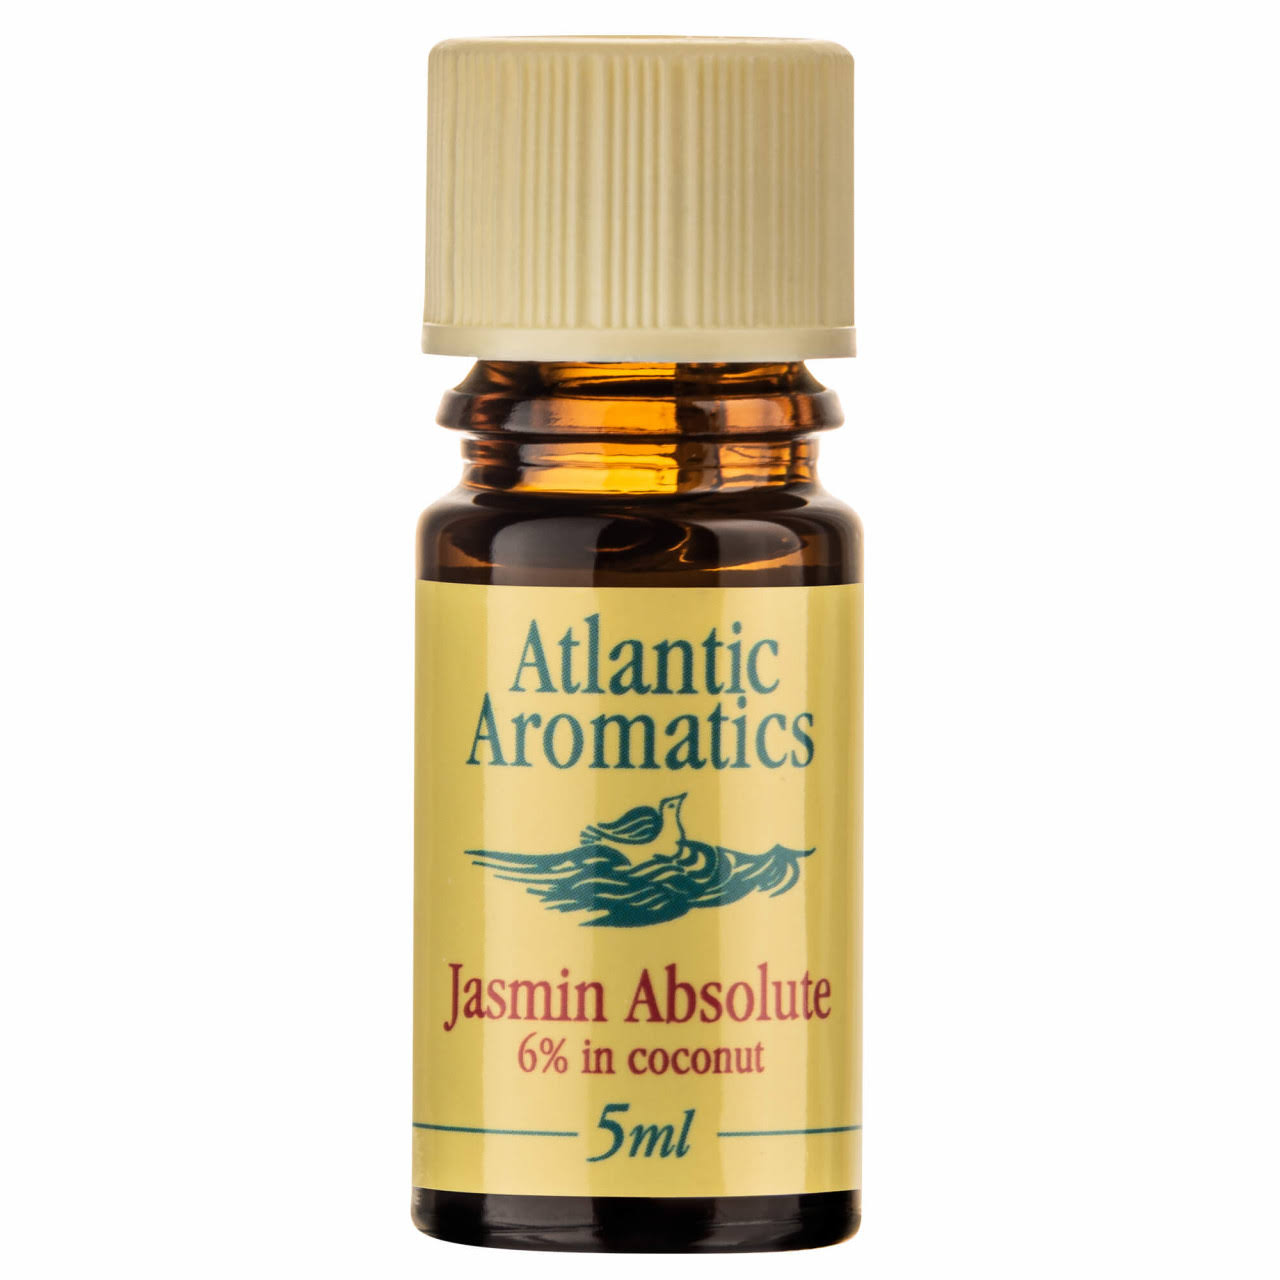 Atlantic Aromatics Jasmin Absolute Oil 5ml